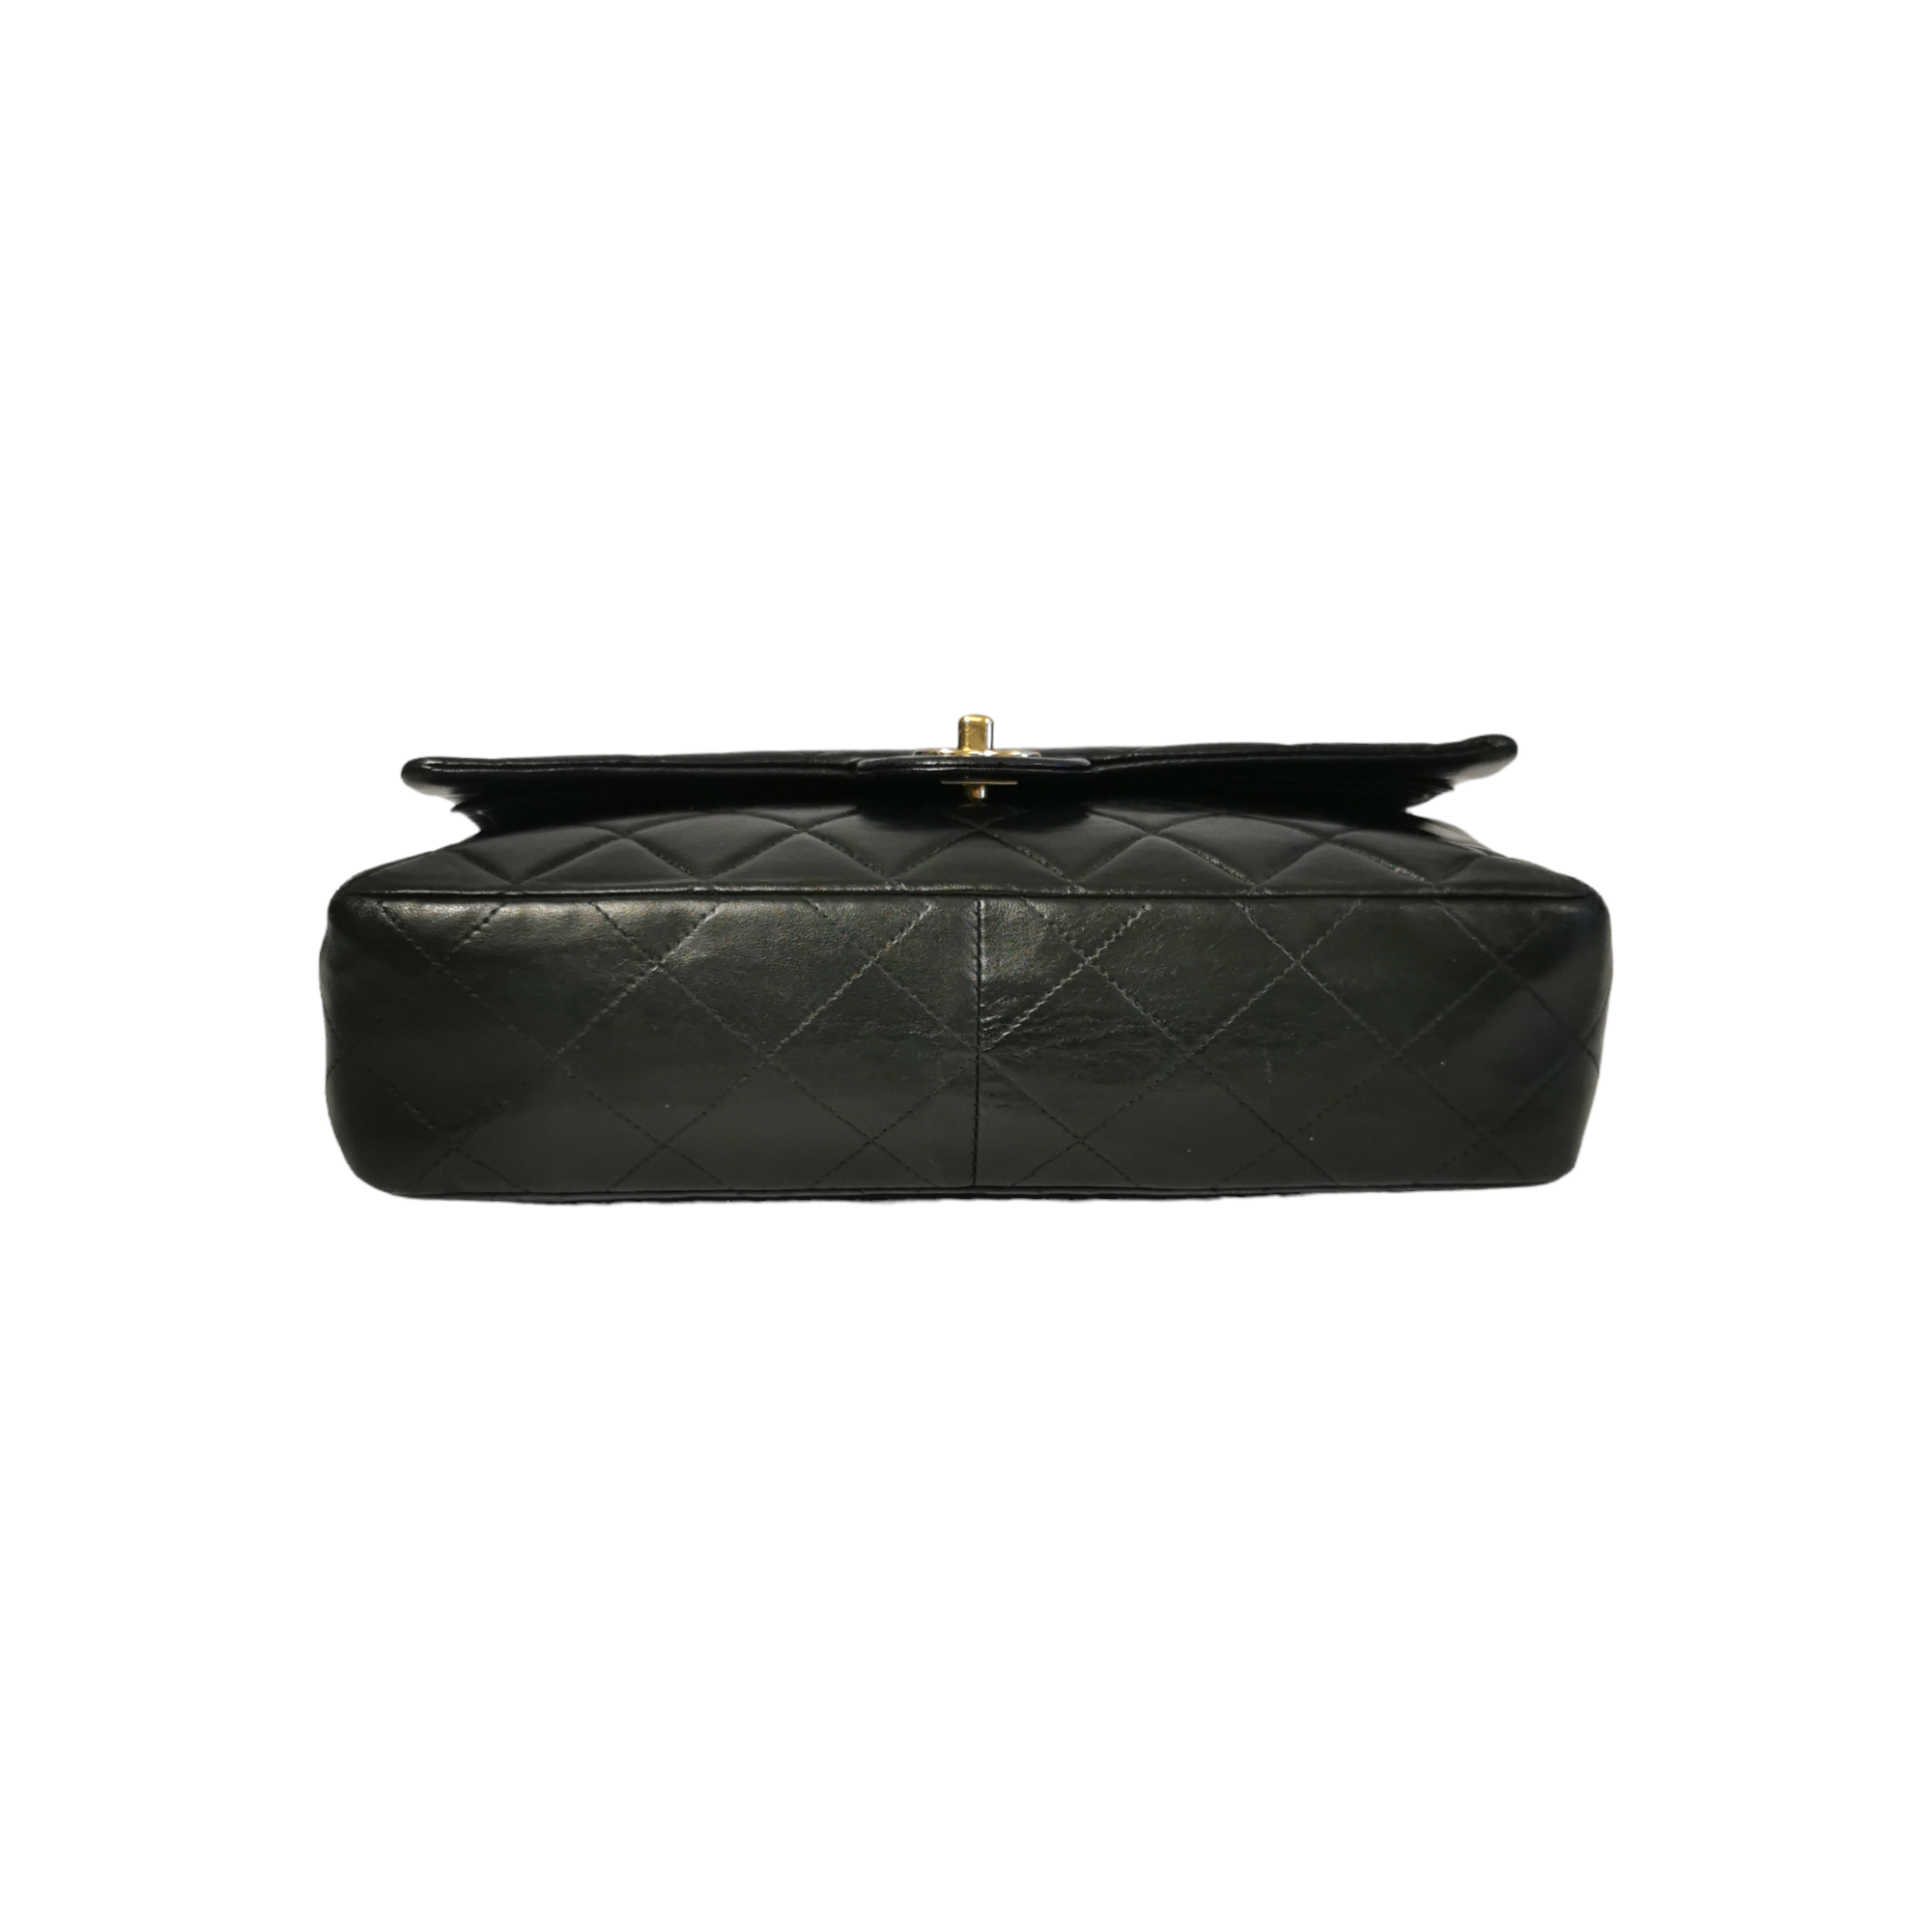 CHANEL Rare Classic single flap shoulder bag in black/beige quilted la